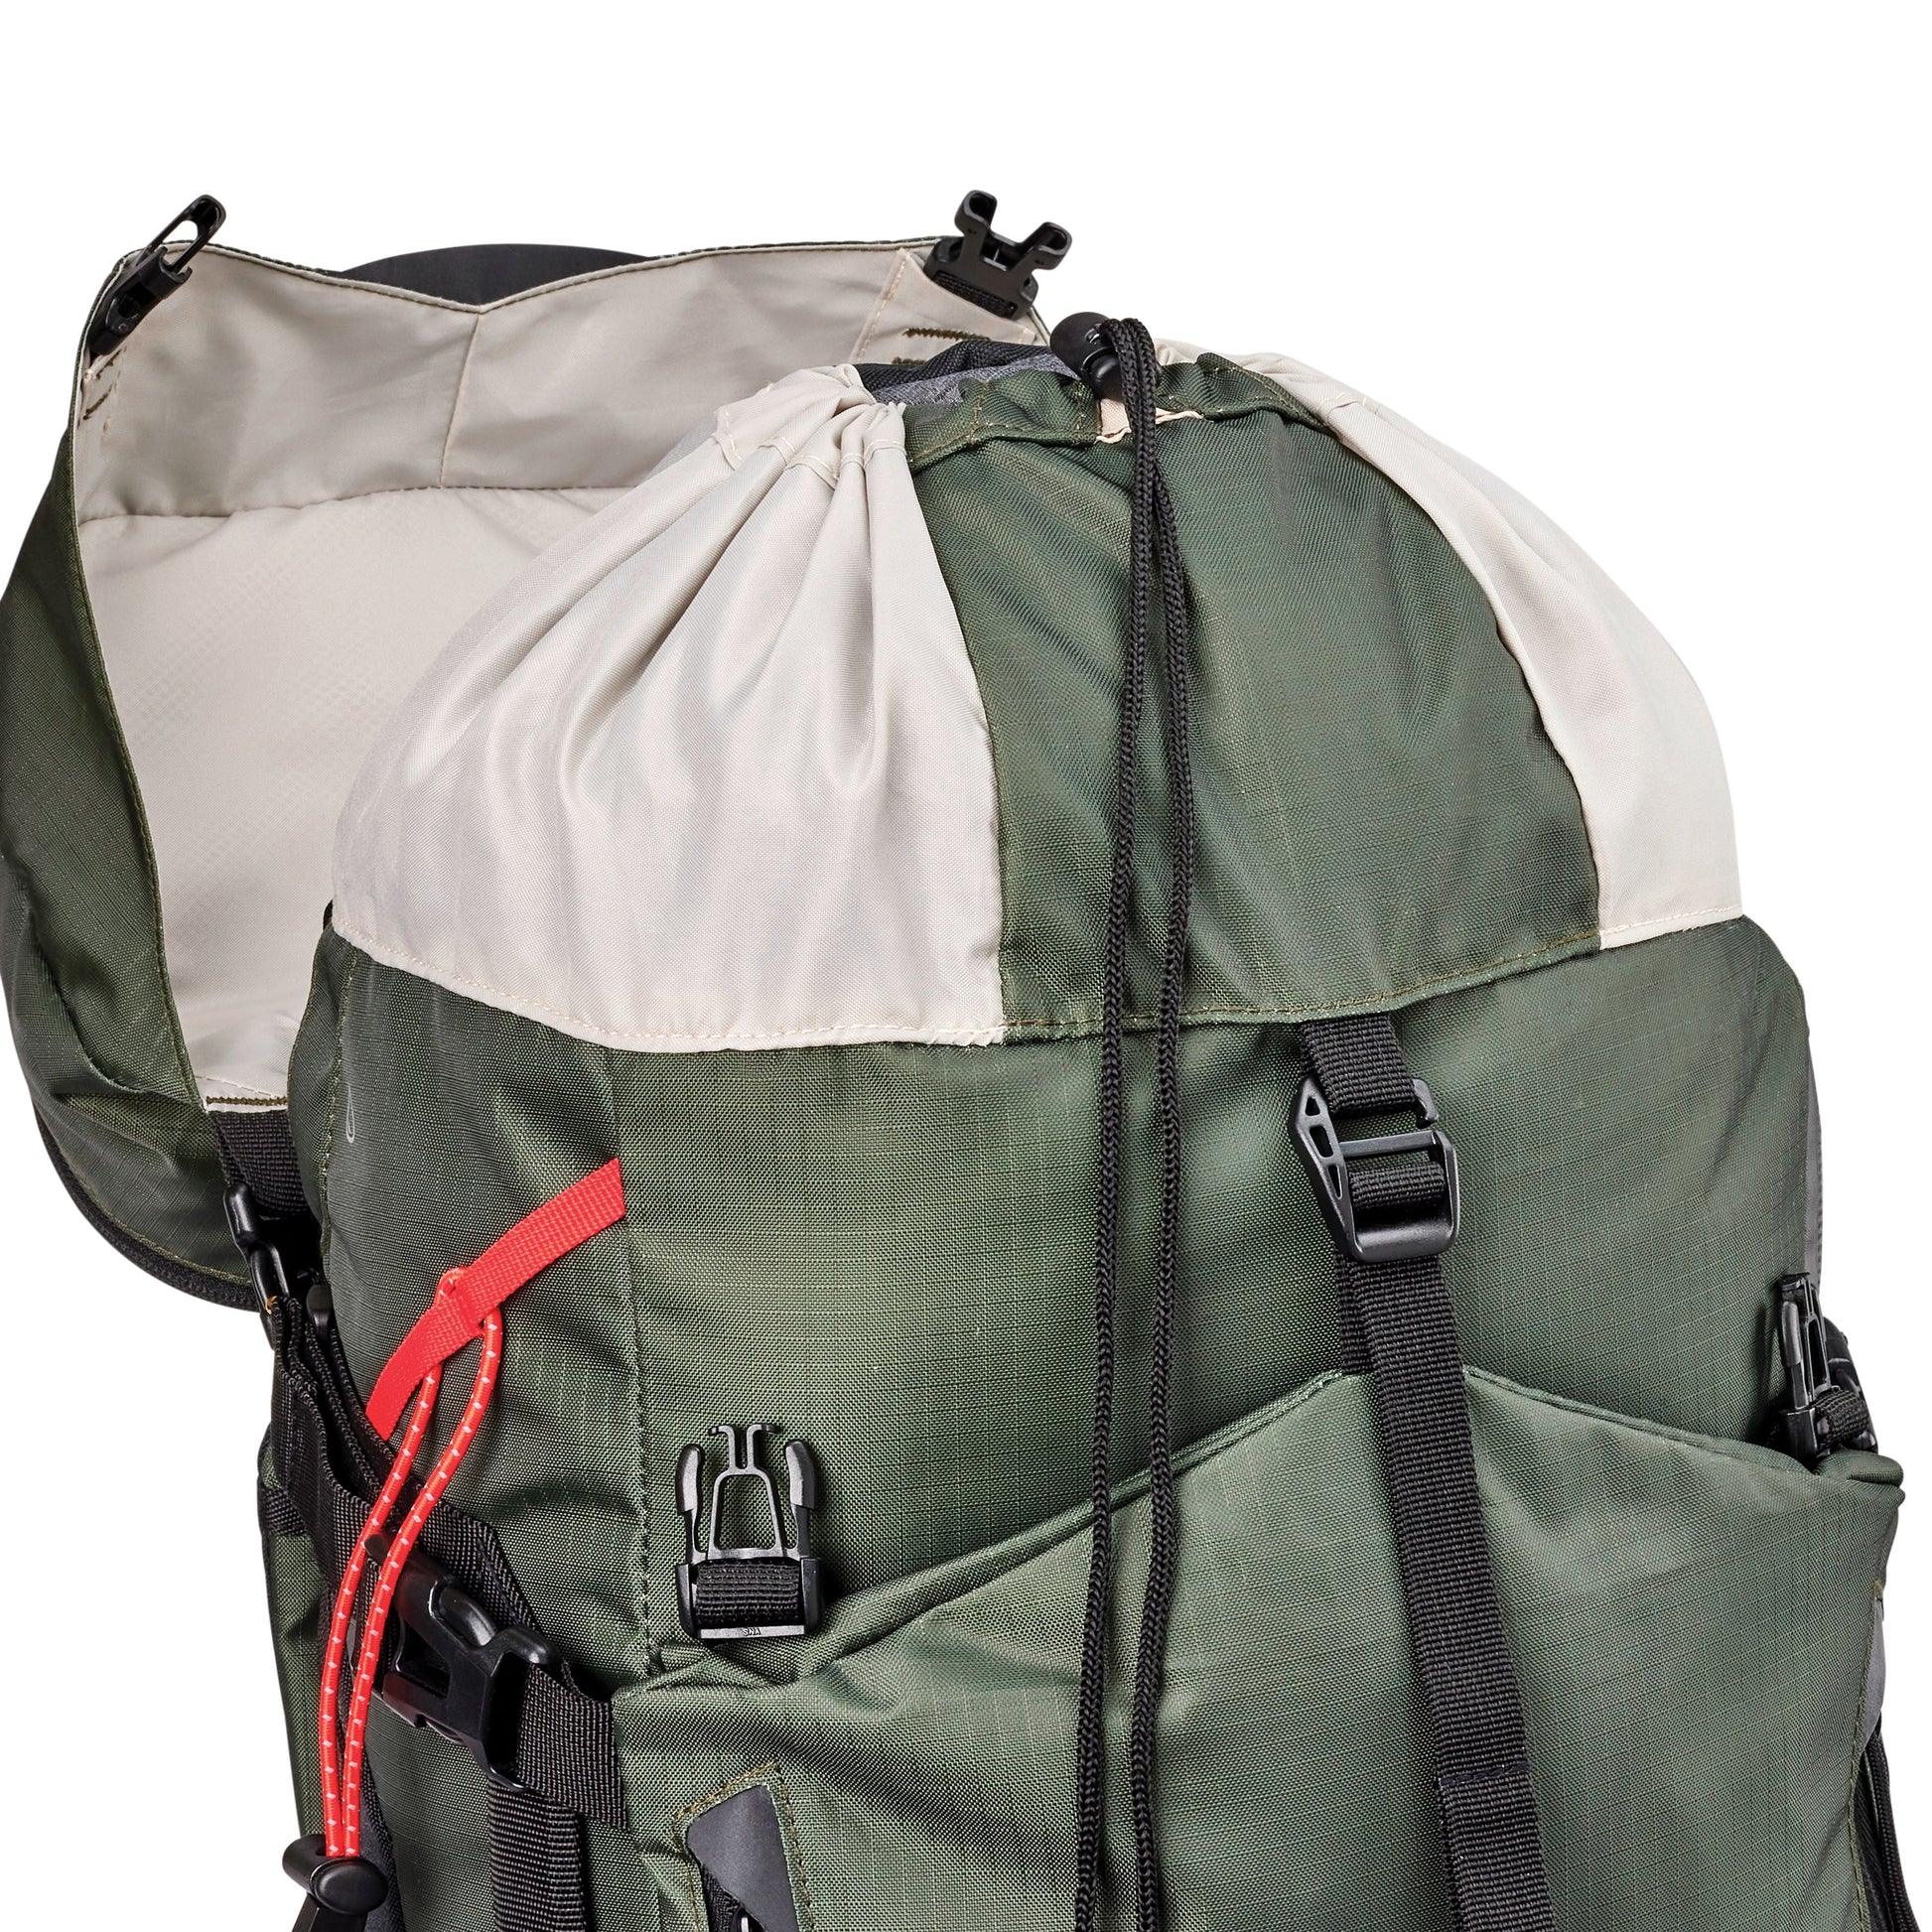 High Sierra Pathway 2.0 Frame Pack 75L Backpack - Forest Green/Black